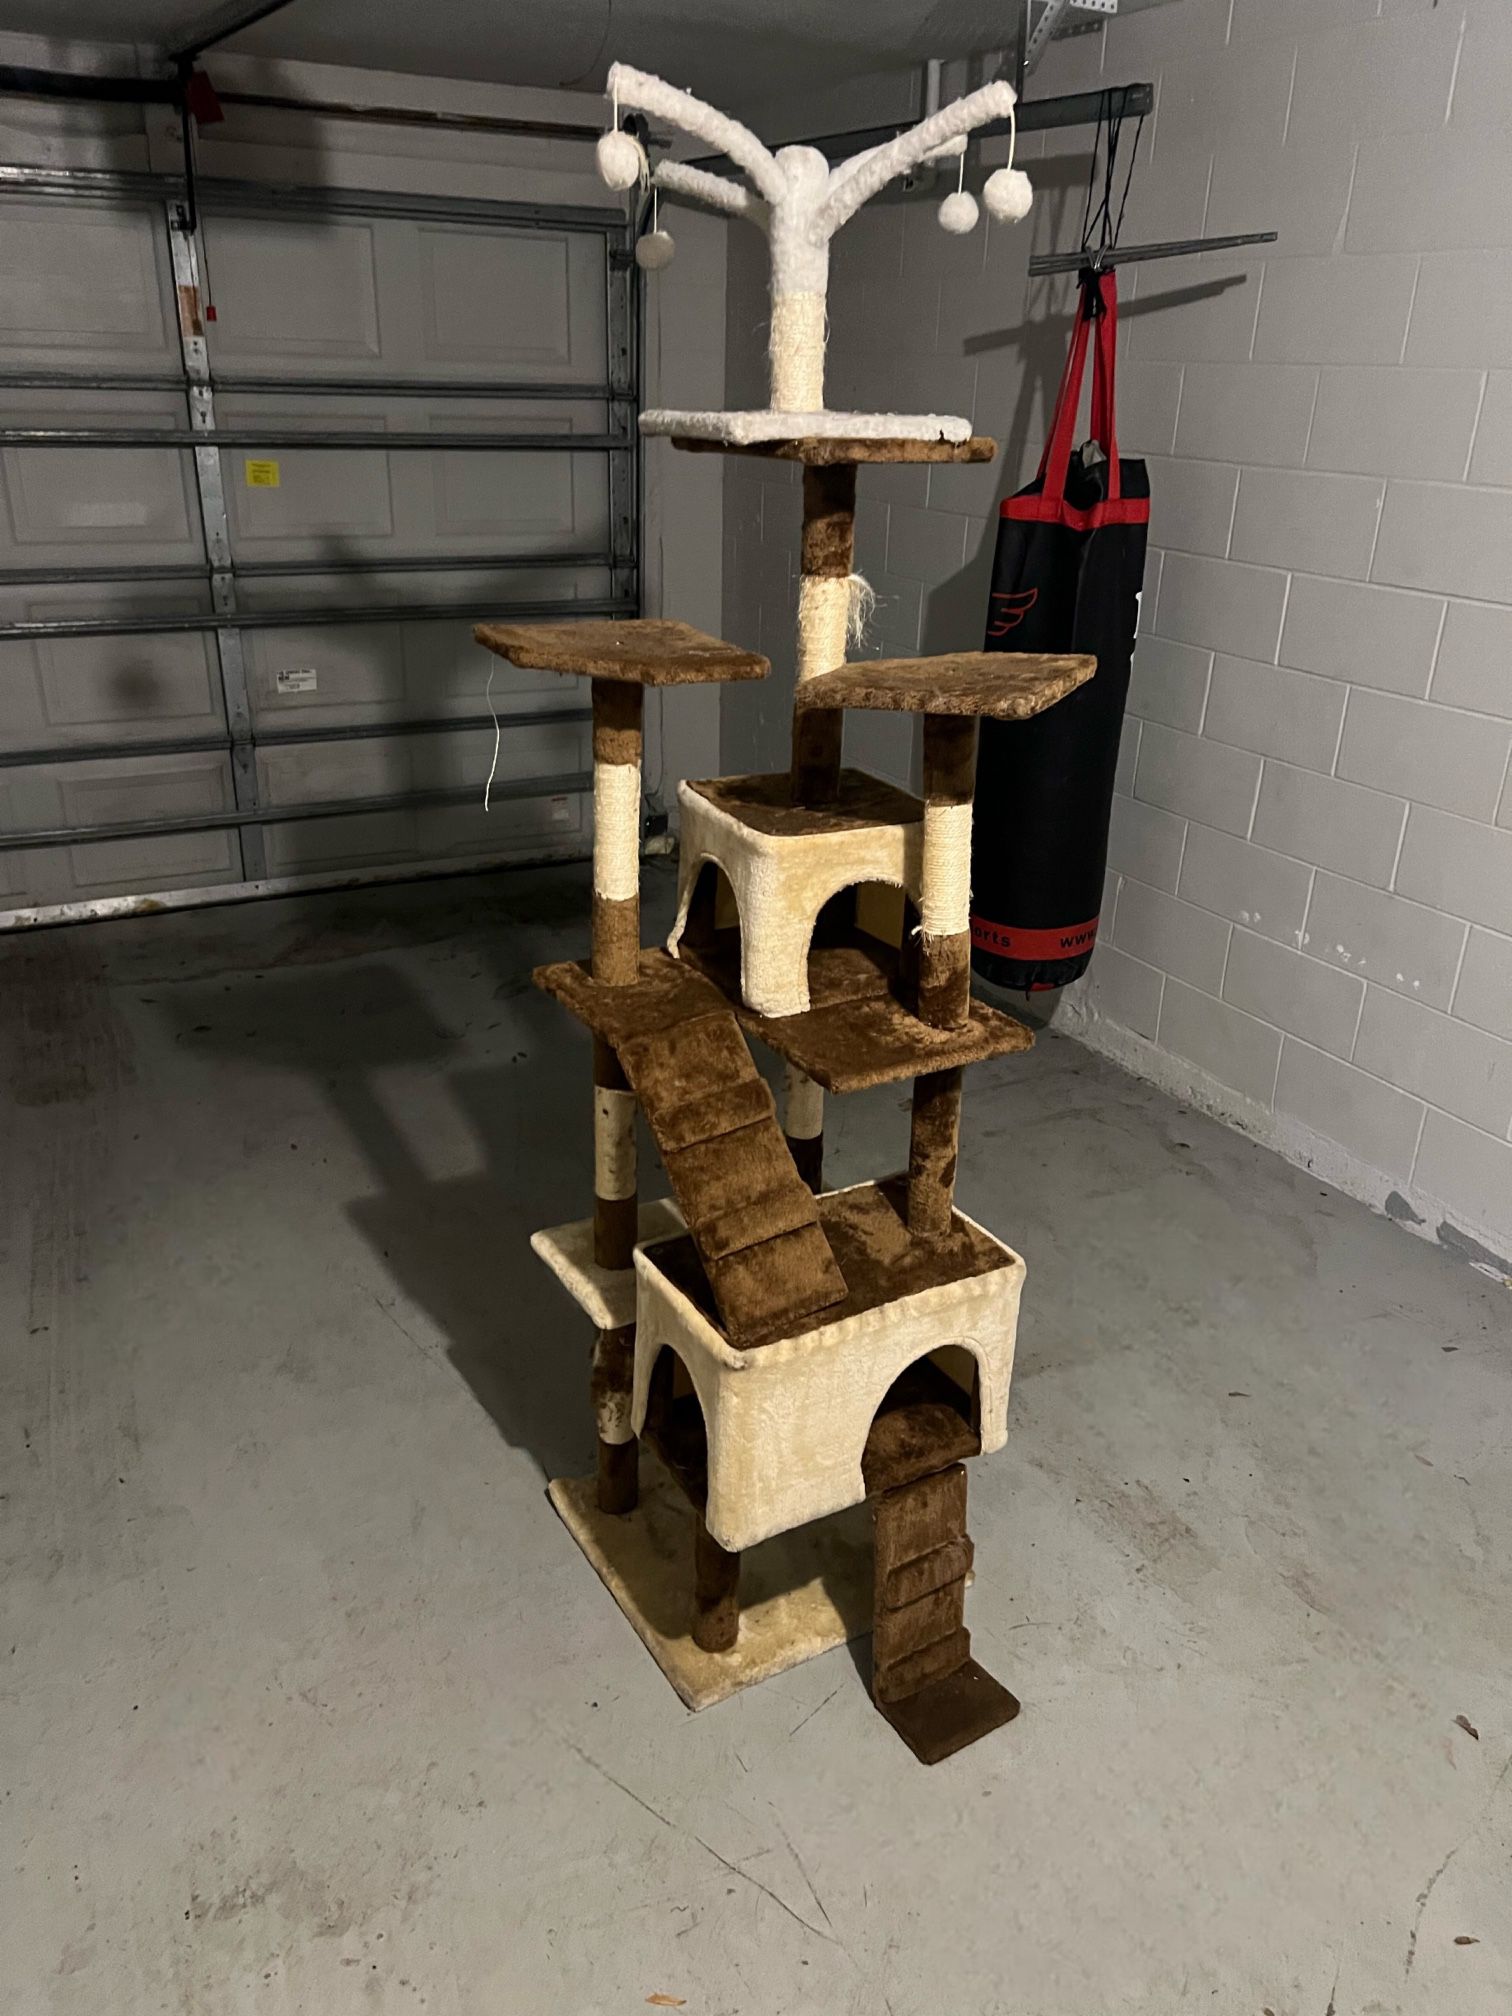 Cat Tower Cat Tree